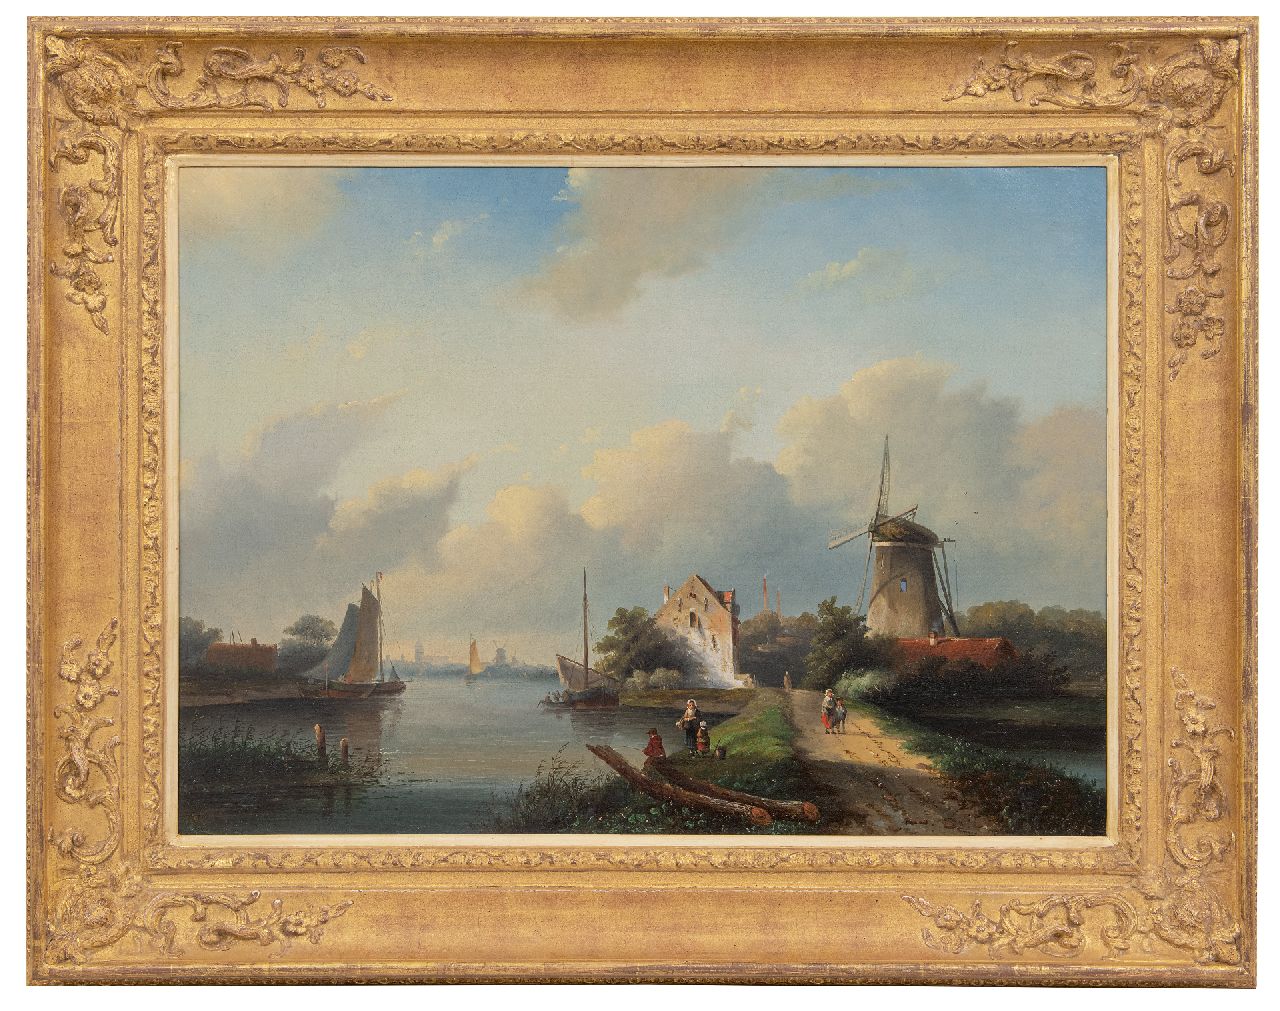 Spohler J.J.  | Jan Jacob Spohler | Paintings offered for sale | A summer landscape with figures near a river, oil on canvas 56.6 x 78.4 cm, signed l.l.